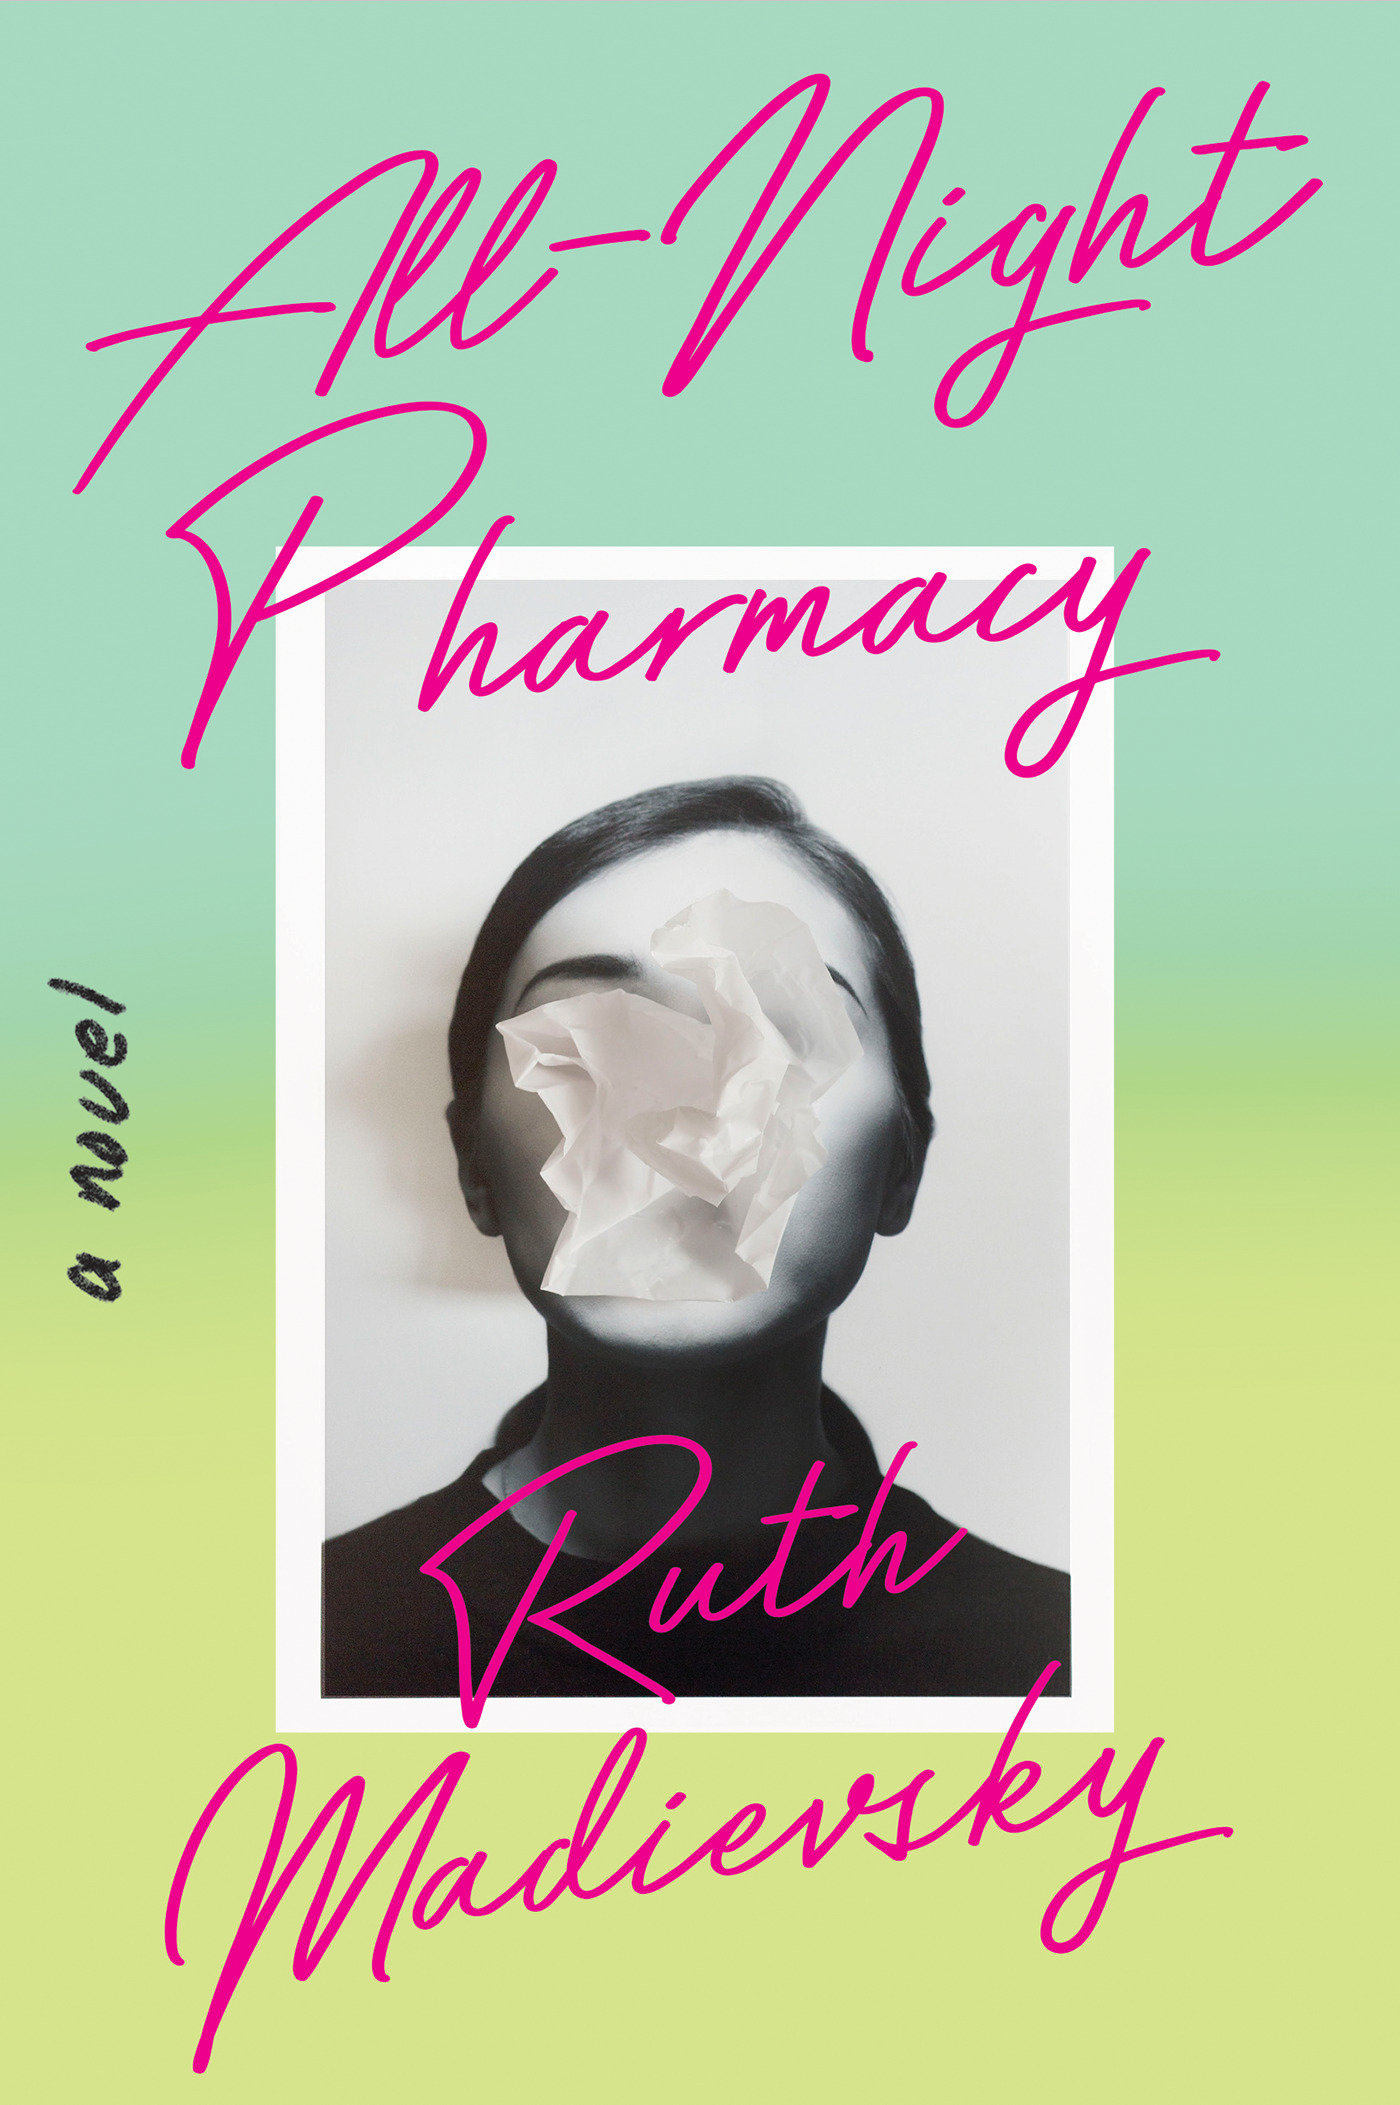 All-Night Pharmacy (Hardcover Book)